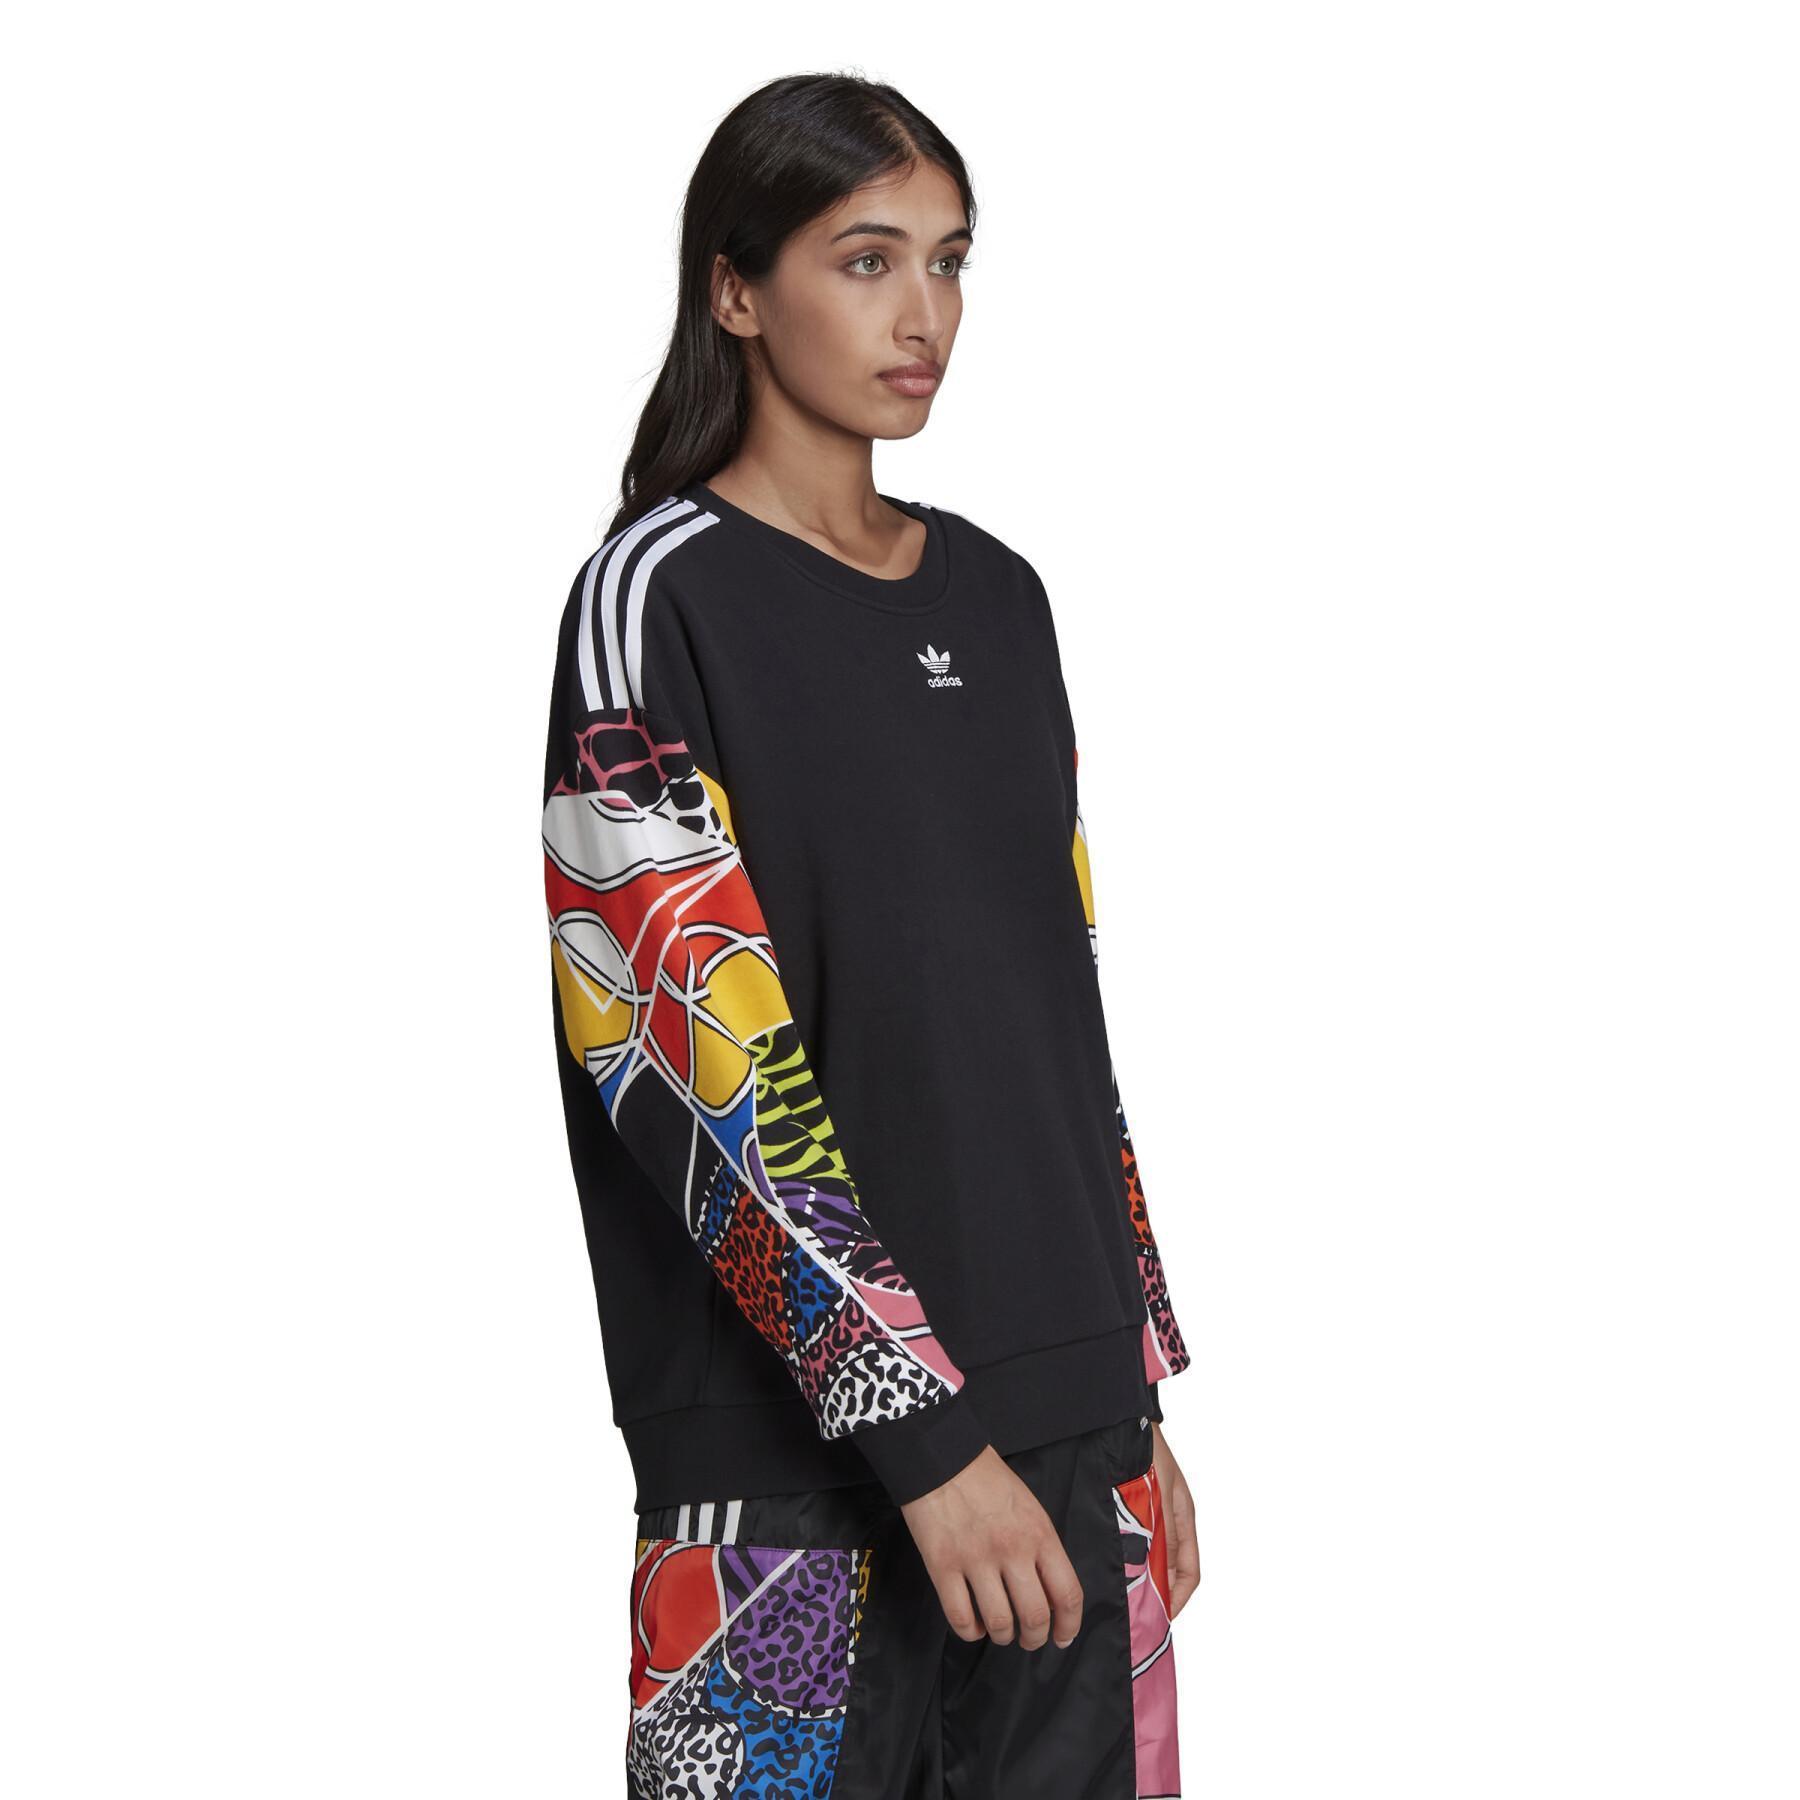 Women's hooded sweatshirt adidas Originals Rich Mnisi